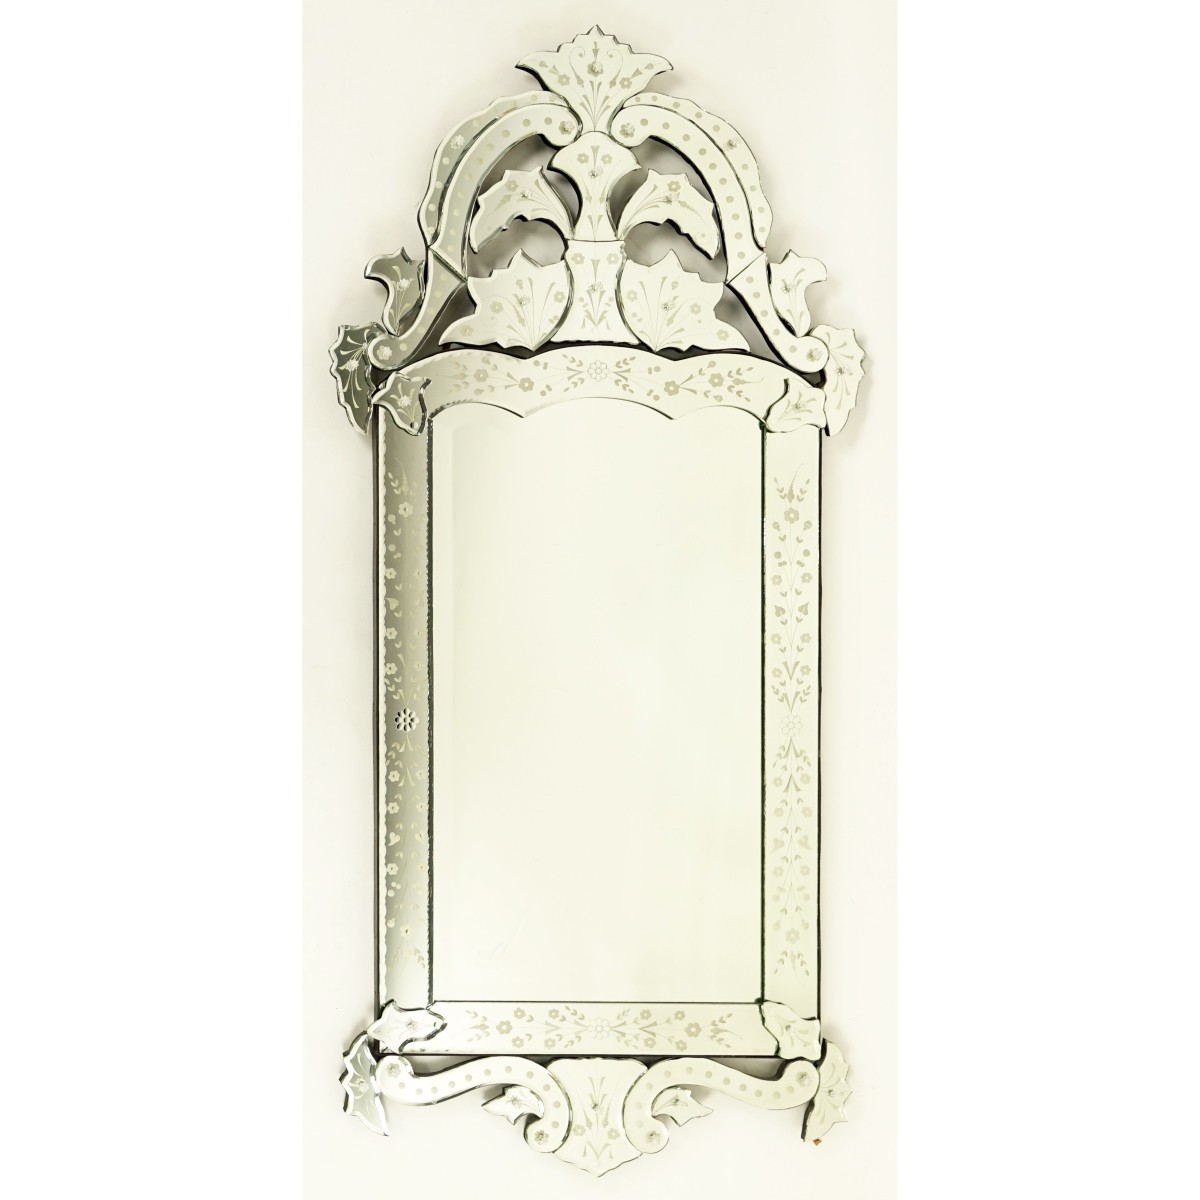 20th Century Venetian Style Mirror